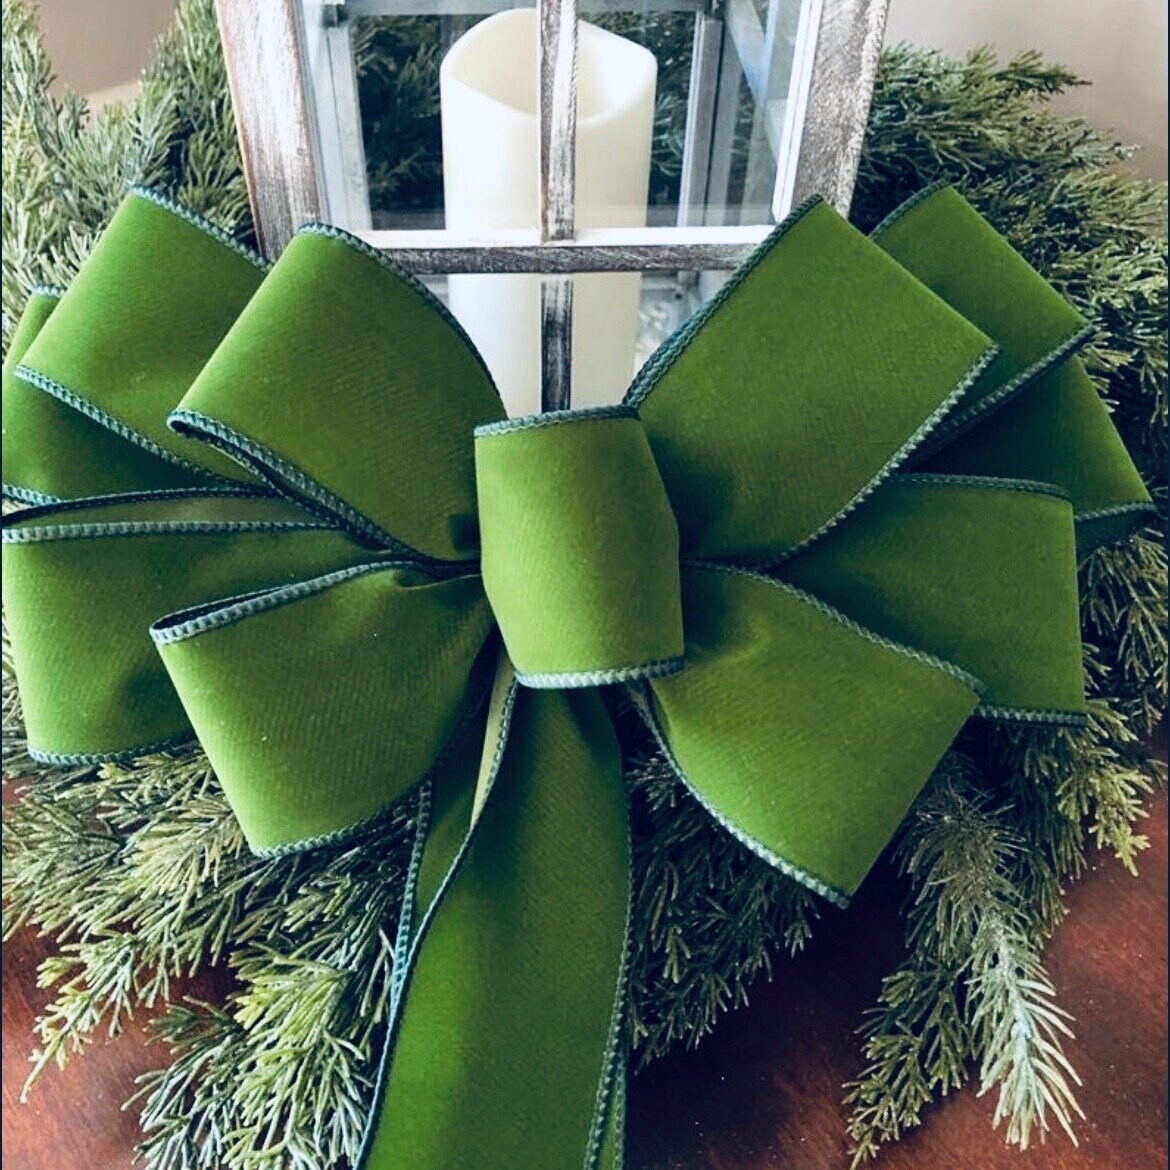 Fall Sheer Bows - Wired Moss Green Sheer Chiffon Wreath Bows 6 Inch